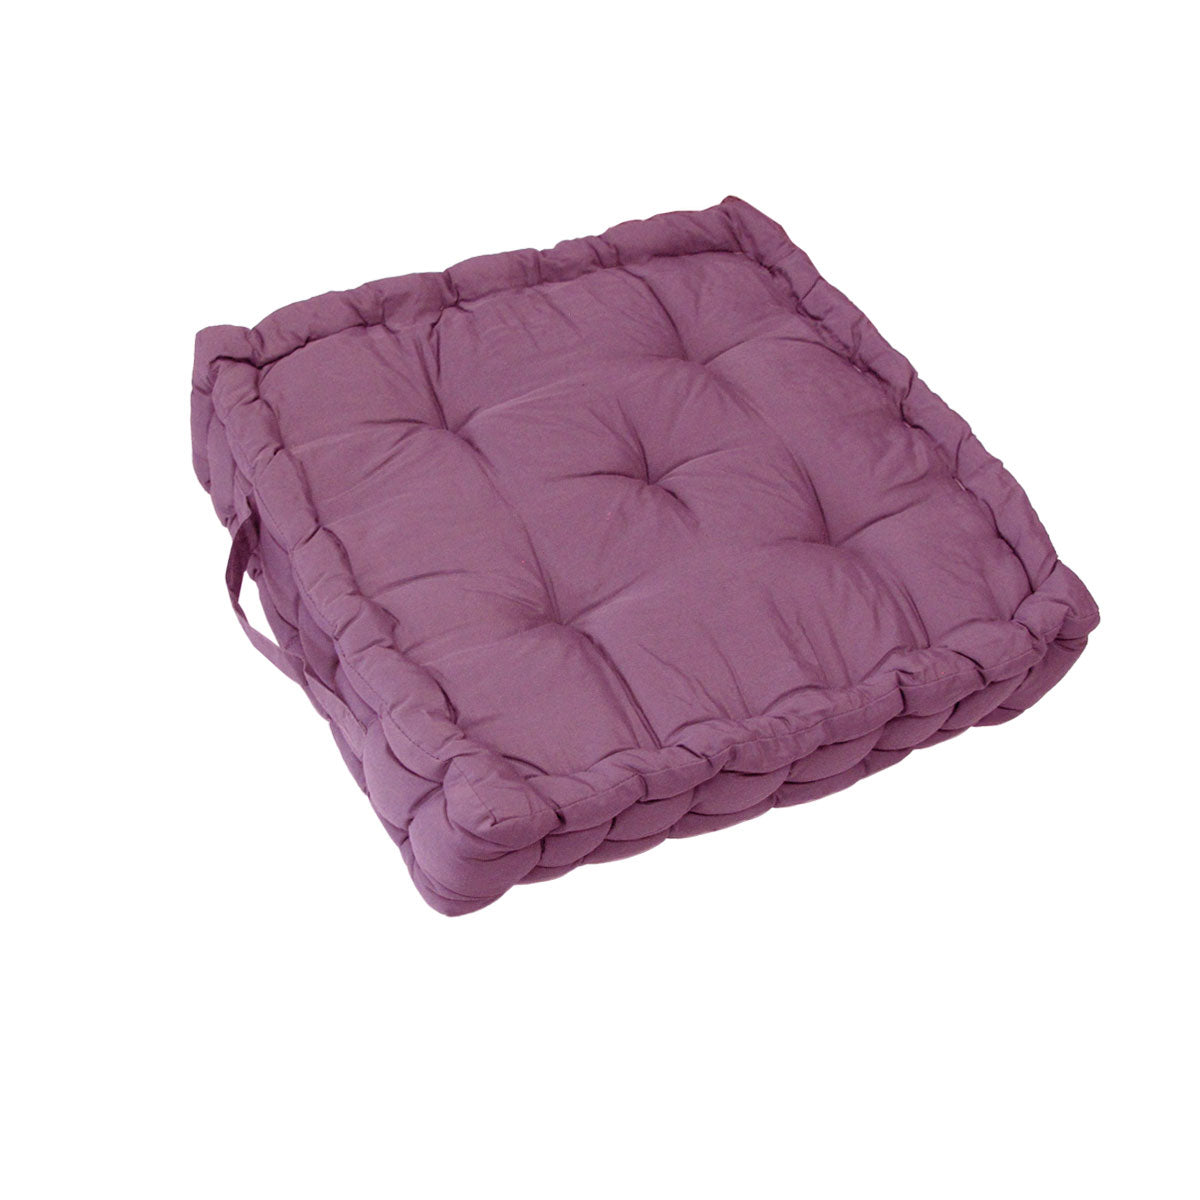 1 Pc Floor Box Cushion Pad 40 x 40+ 8 cm Dusty Pink